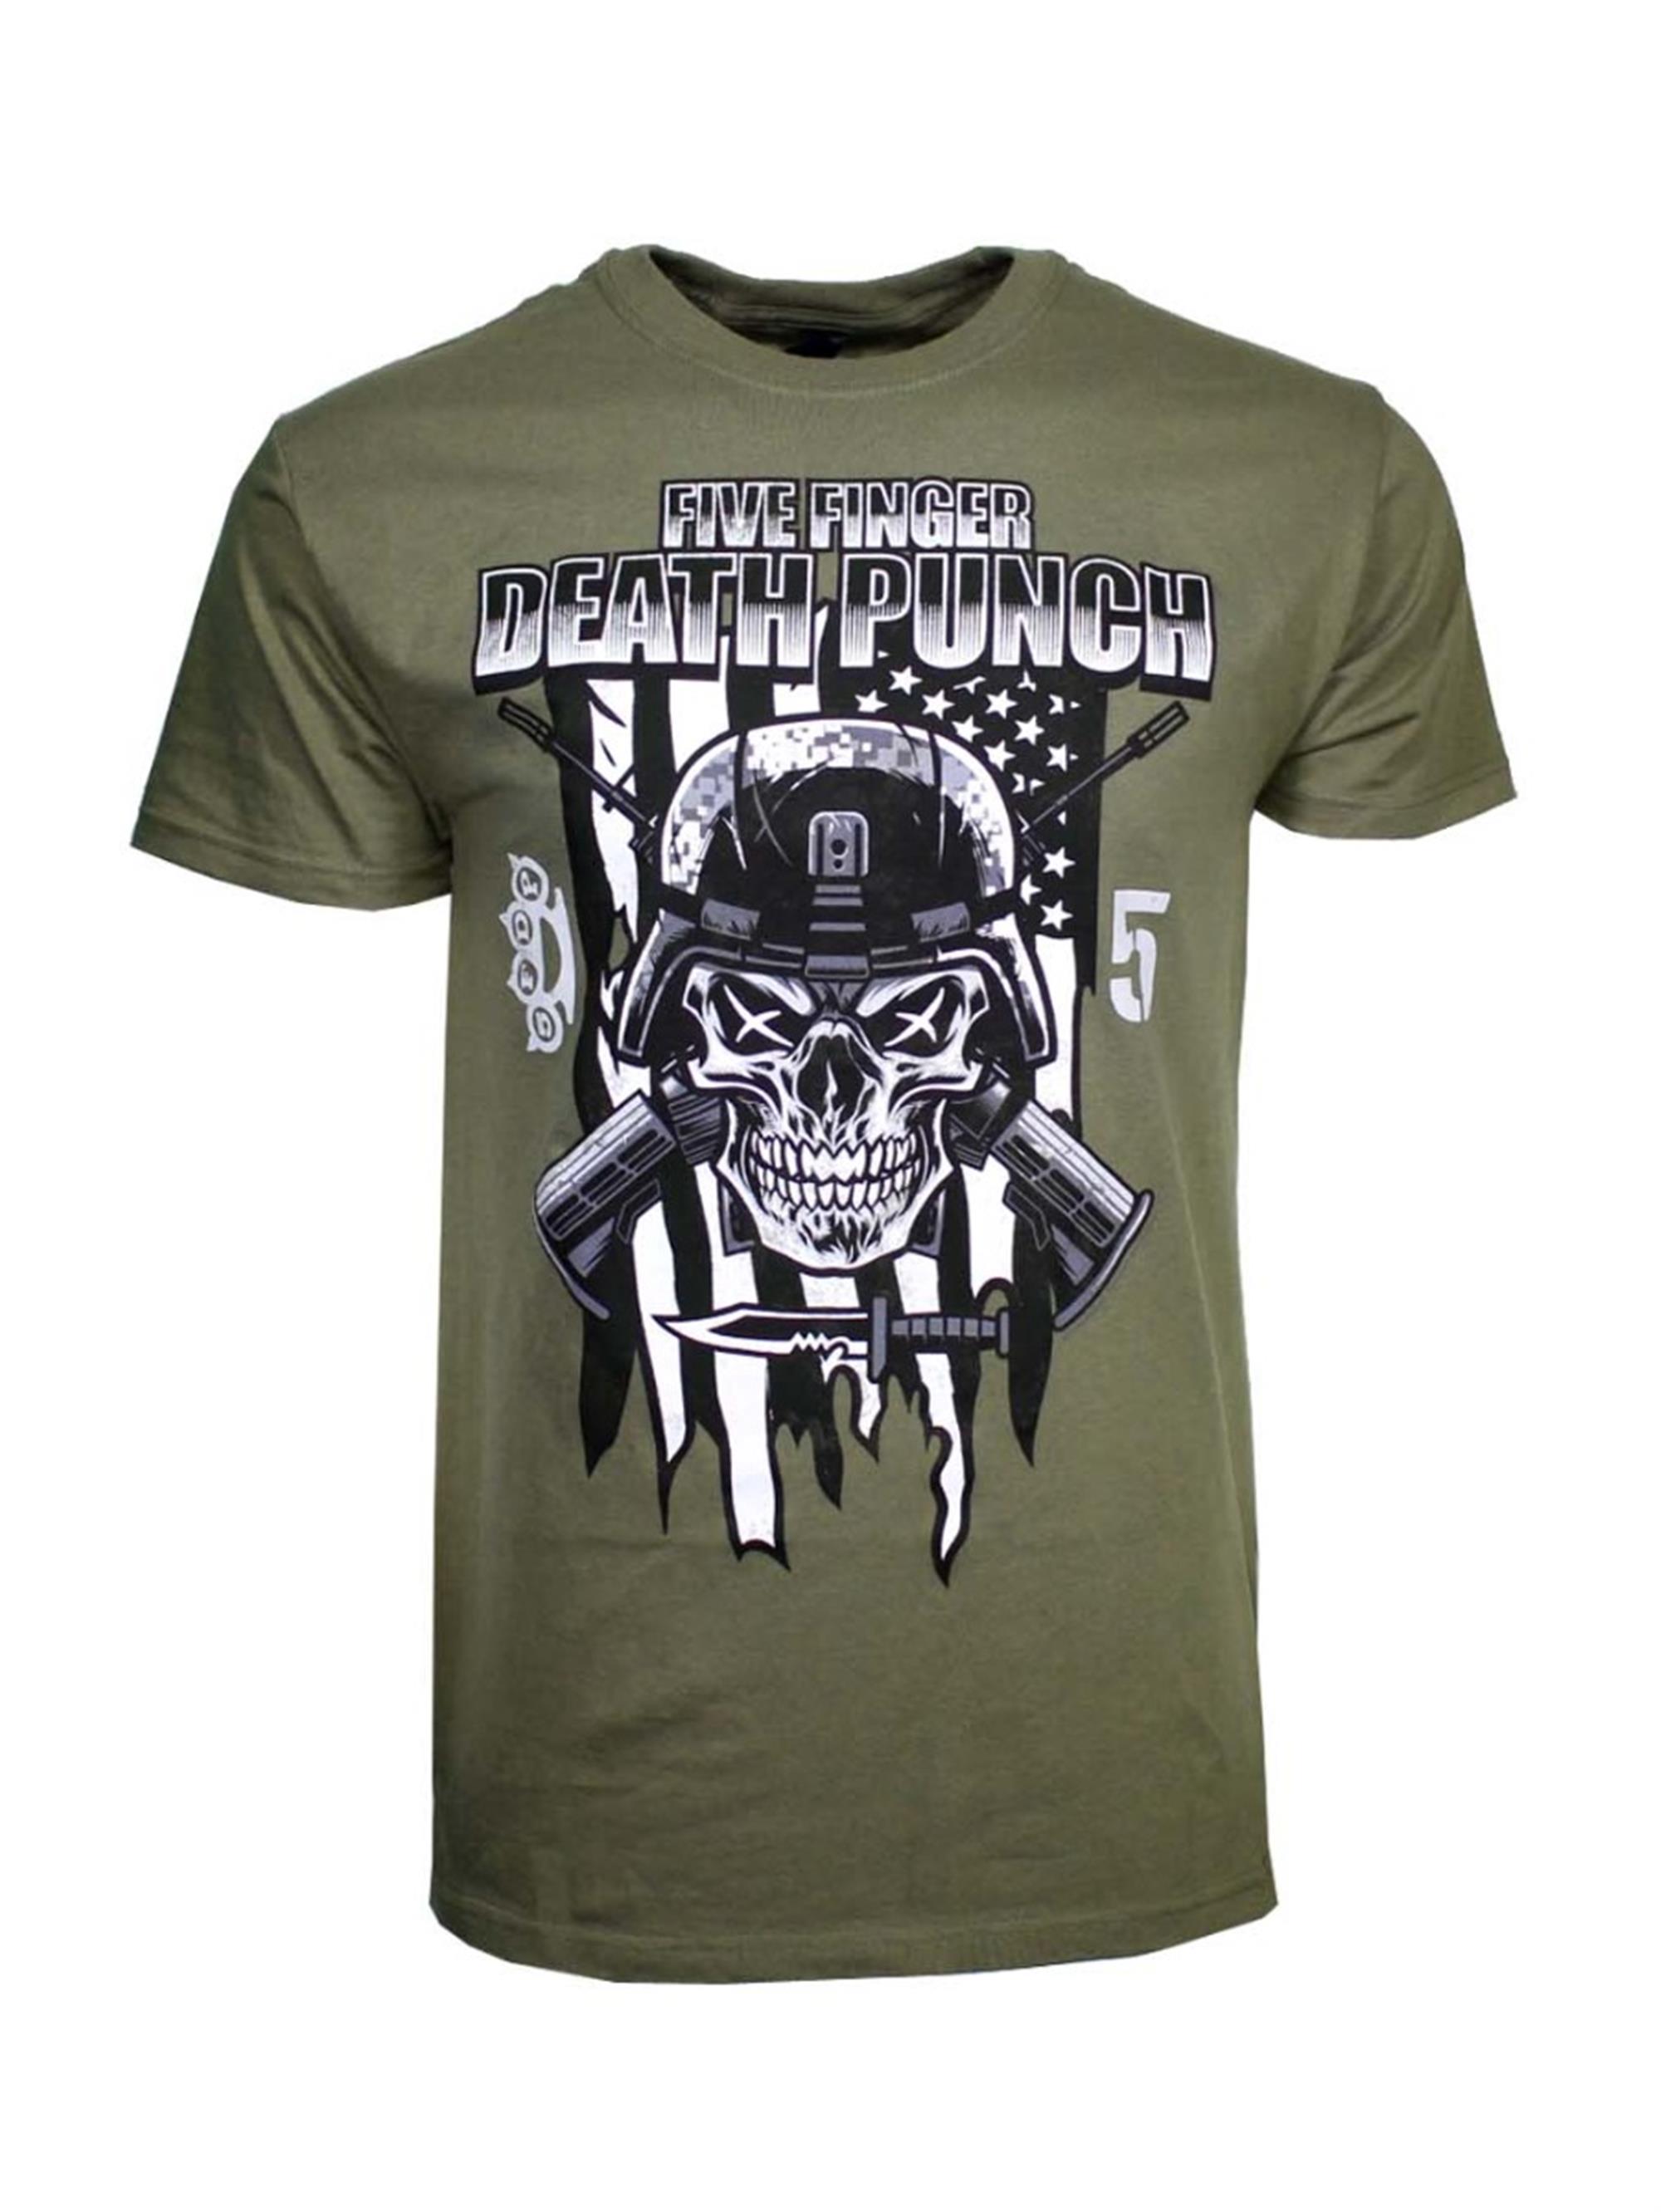 Five Finger Death Punch Infantry Special Forces T-Shirt